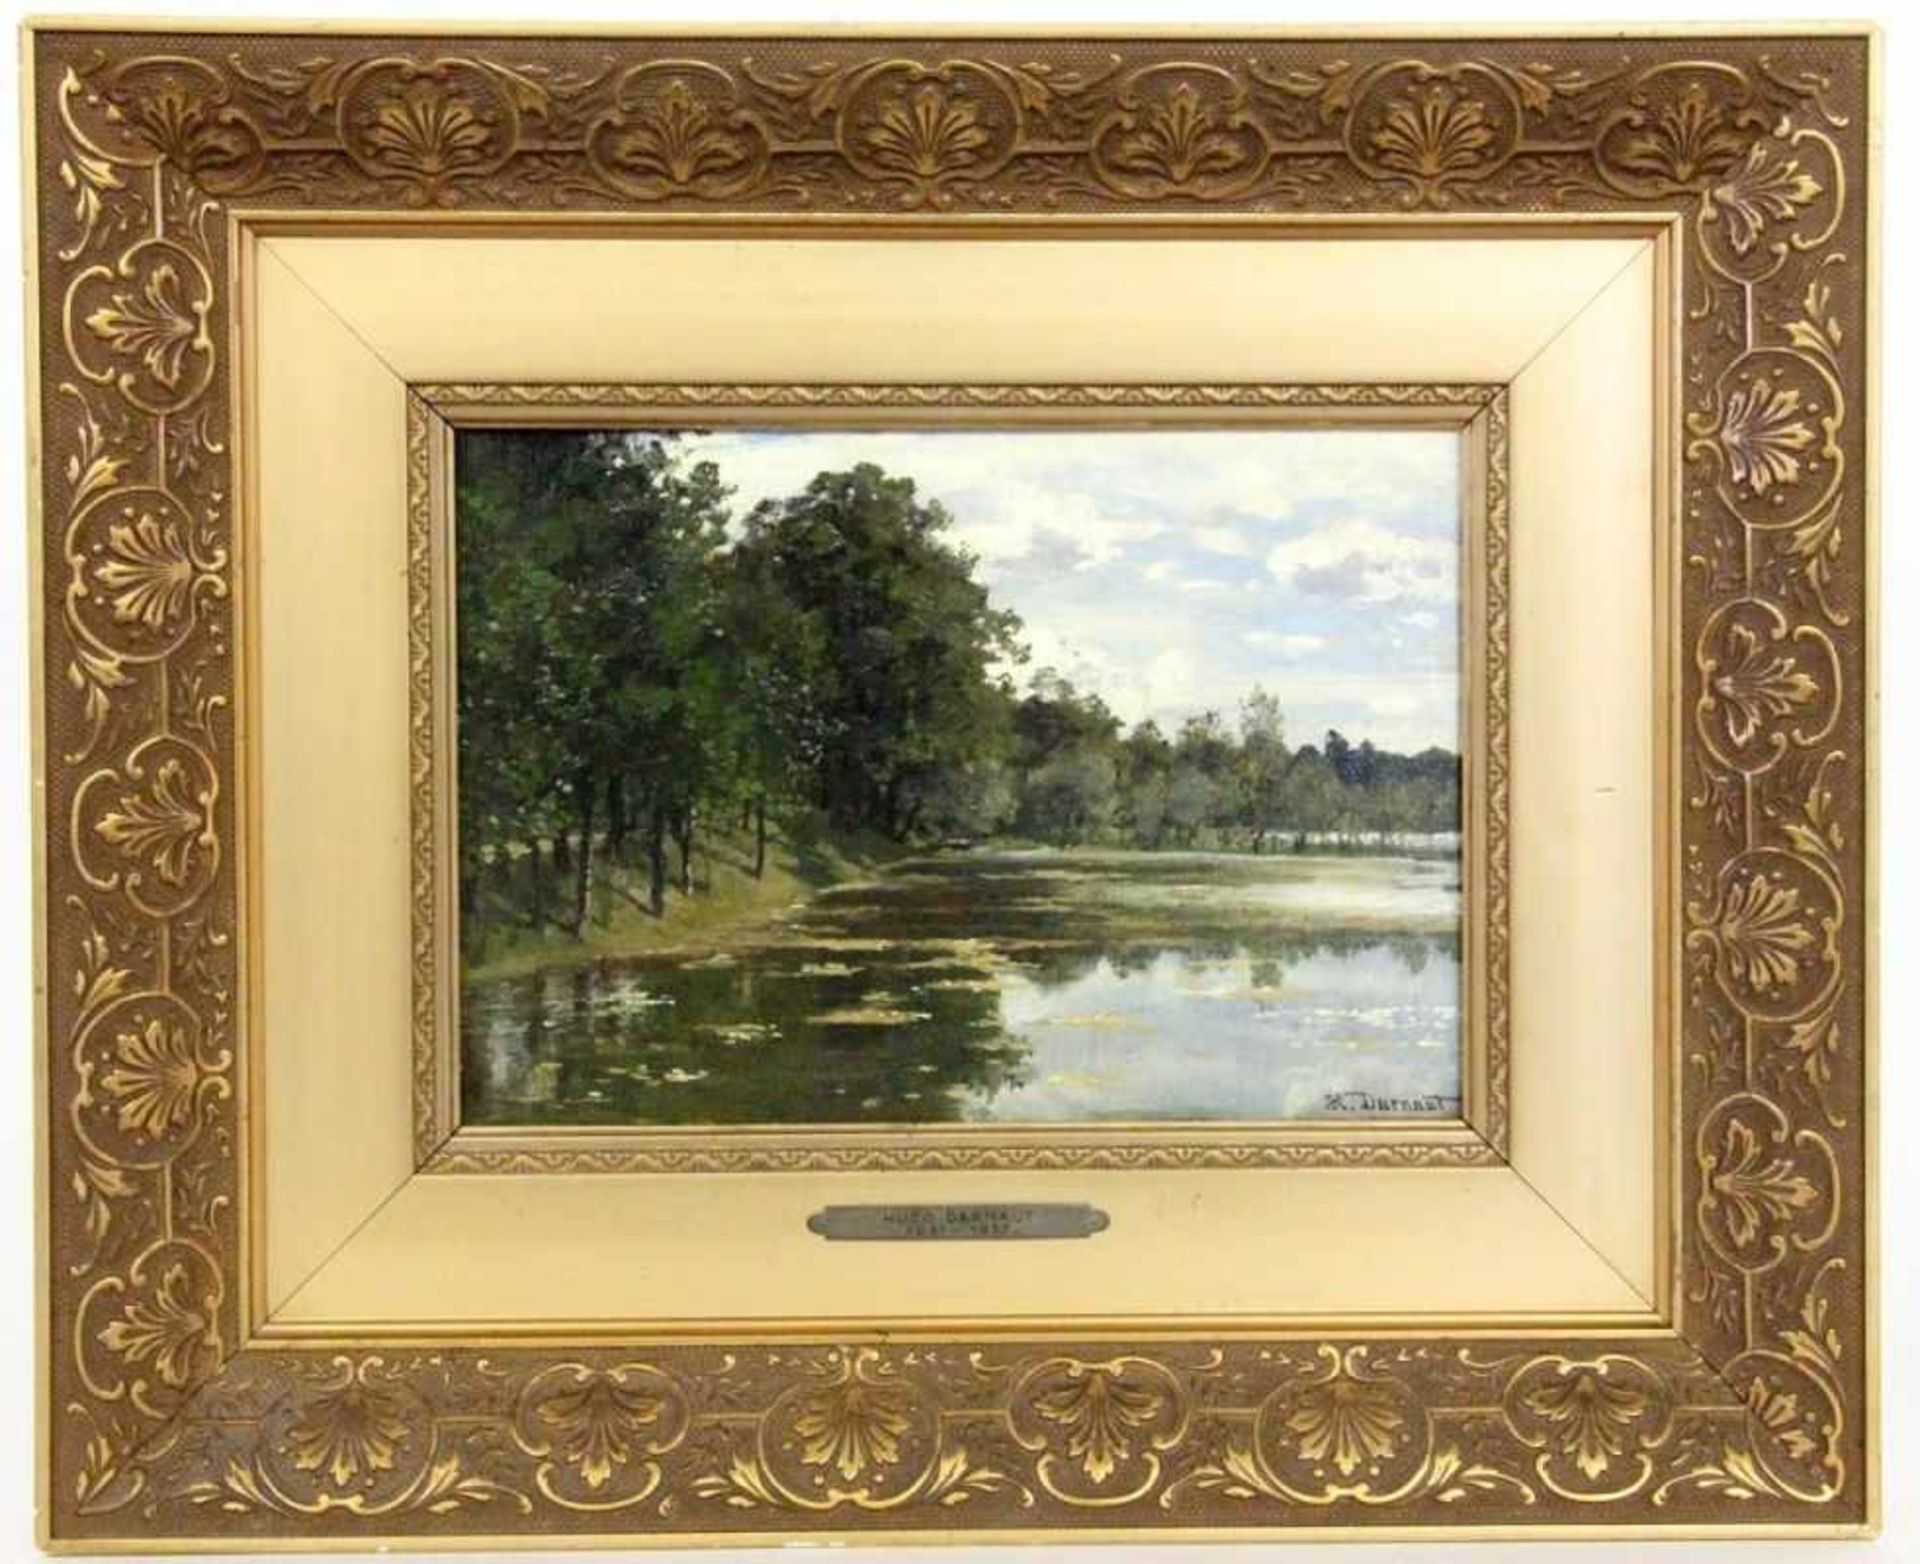 DARNAUT, HUGODessau 1851 - 1937 Wien Parklandschaft mit See. Öl/Holz, signiert. 18x24cm, Ra.